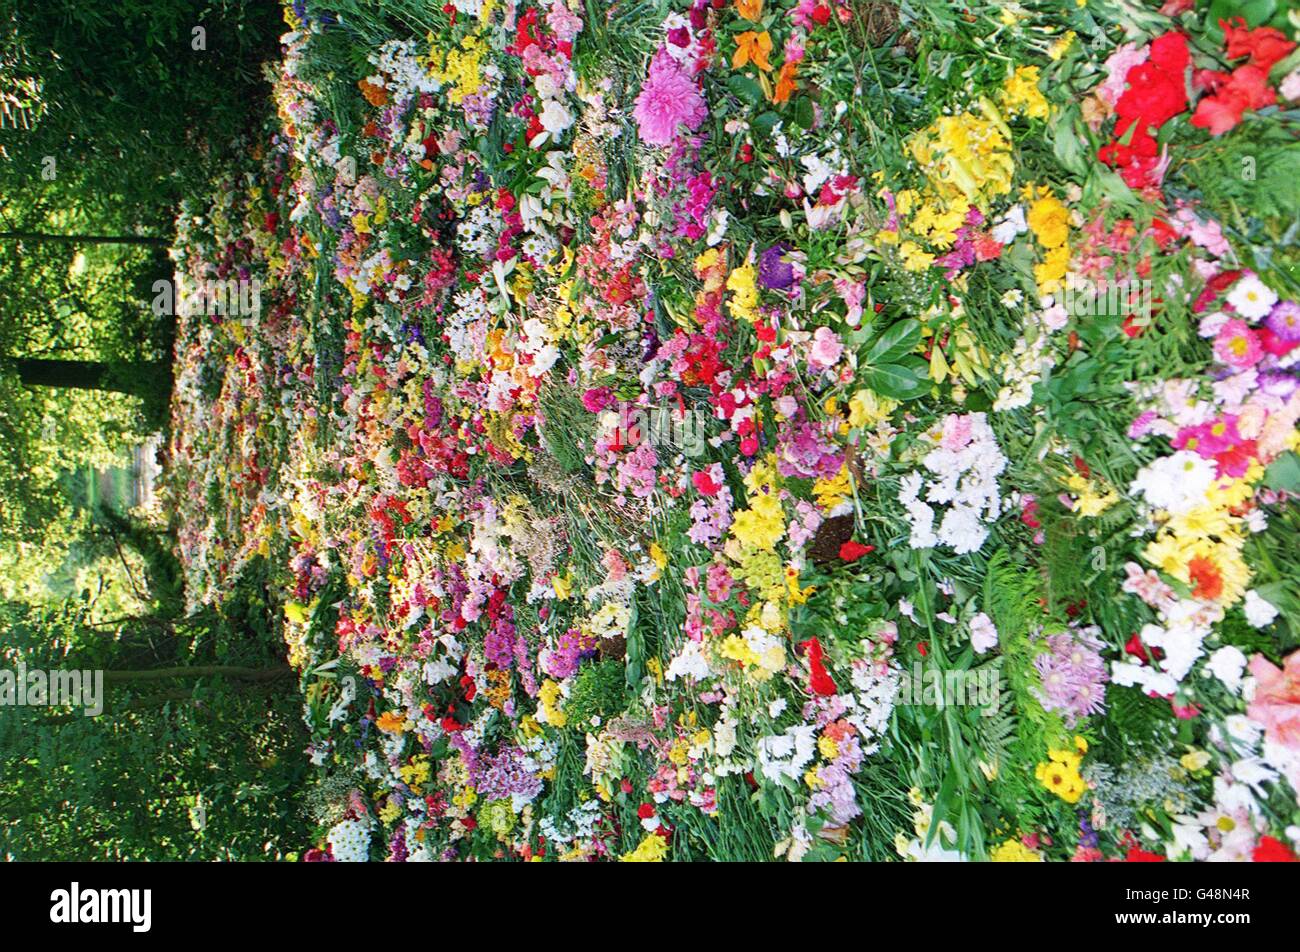 Diana island flowers Stock Photo